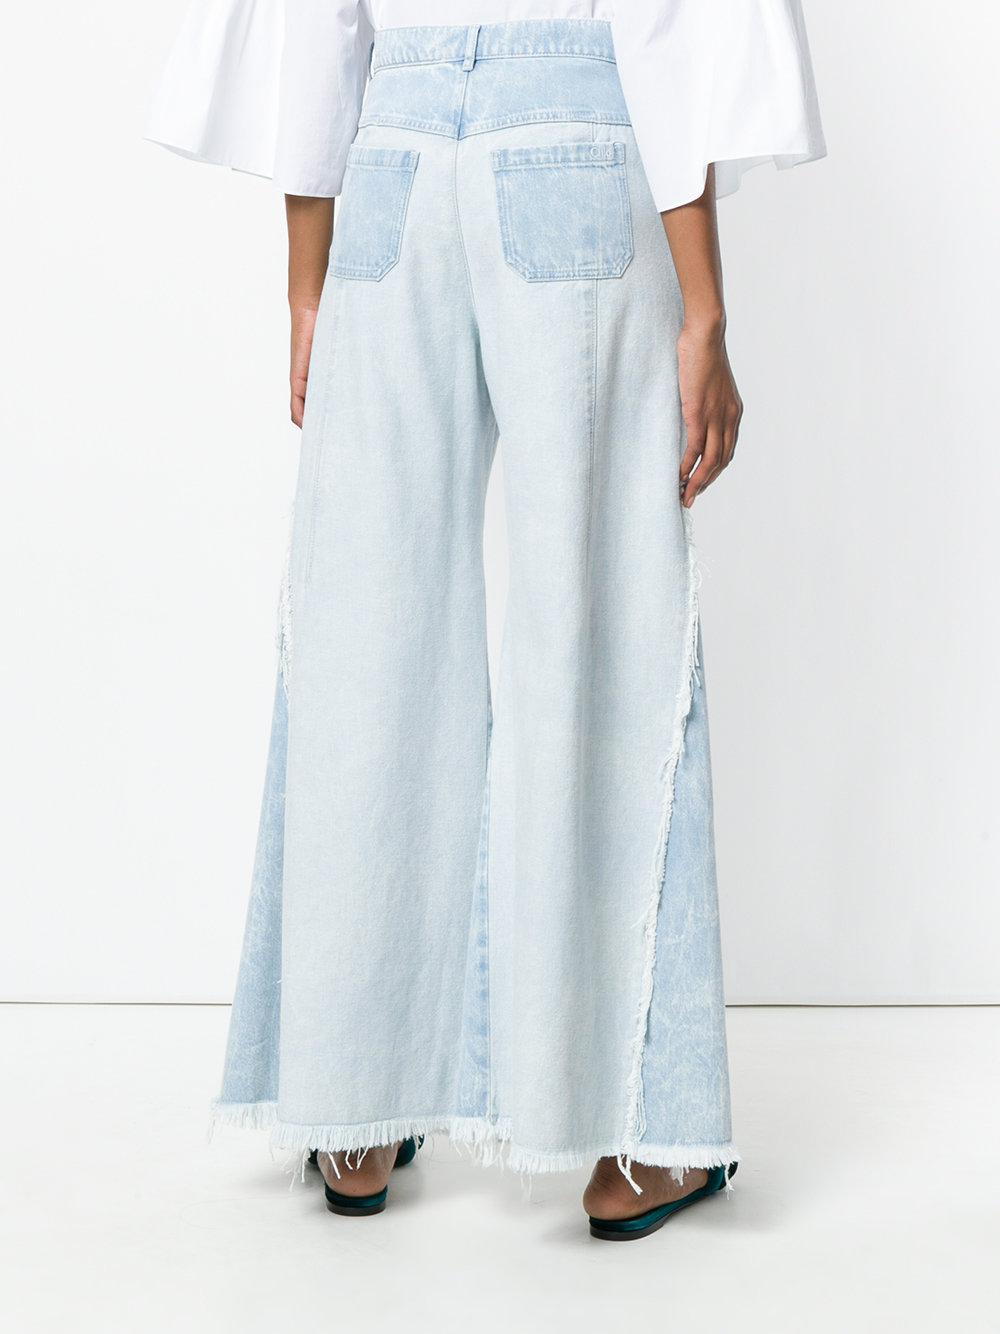 Chloé Denim Frayed High-rise Wide-leg Jeans in Blue - Lyst